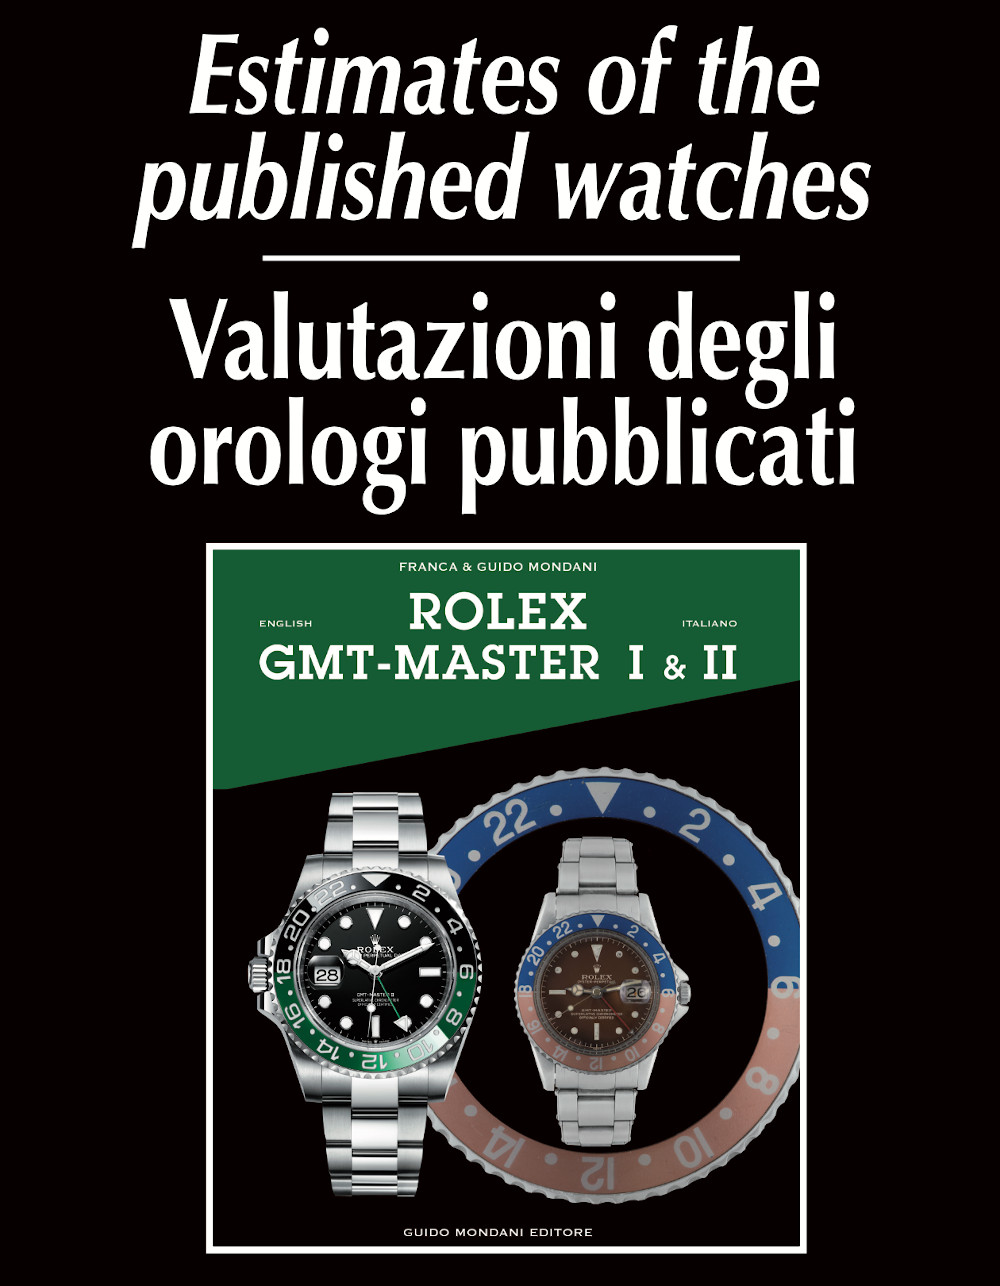 Rolex-GMT-MASTER-Story-Mondani-stime-estimates